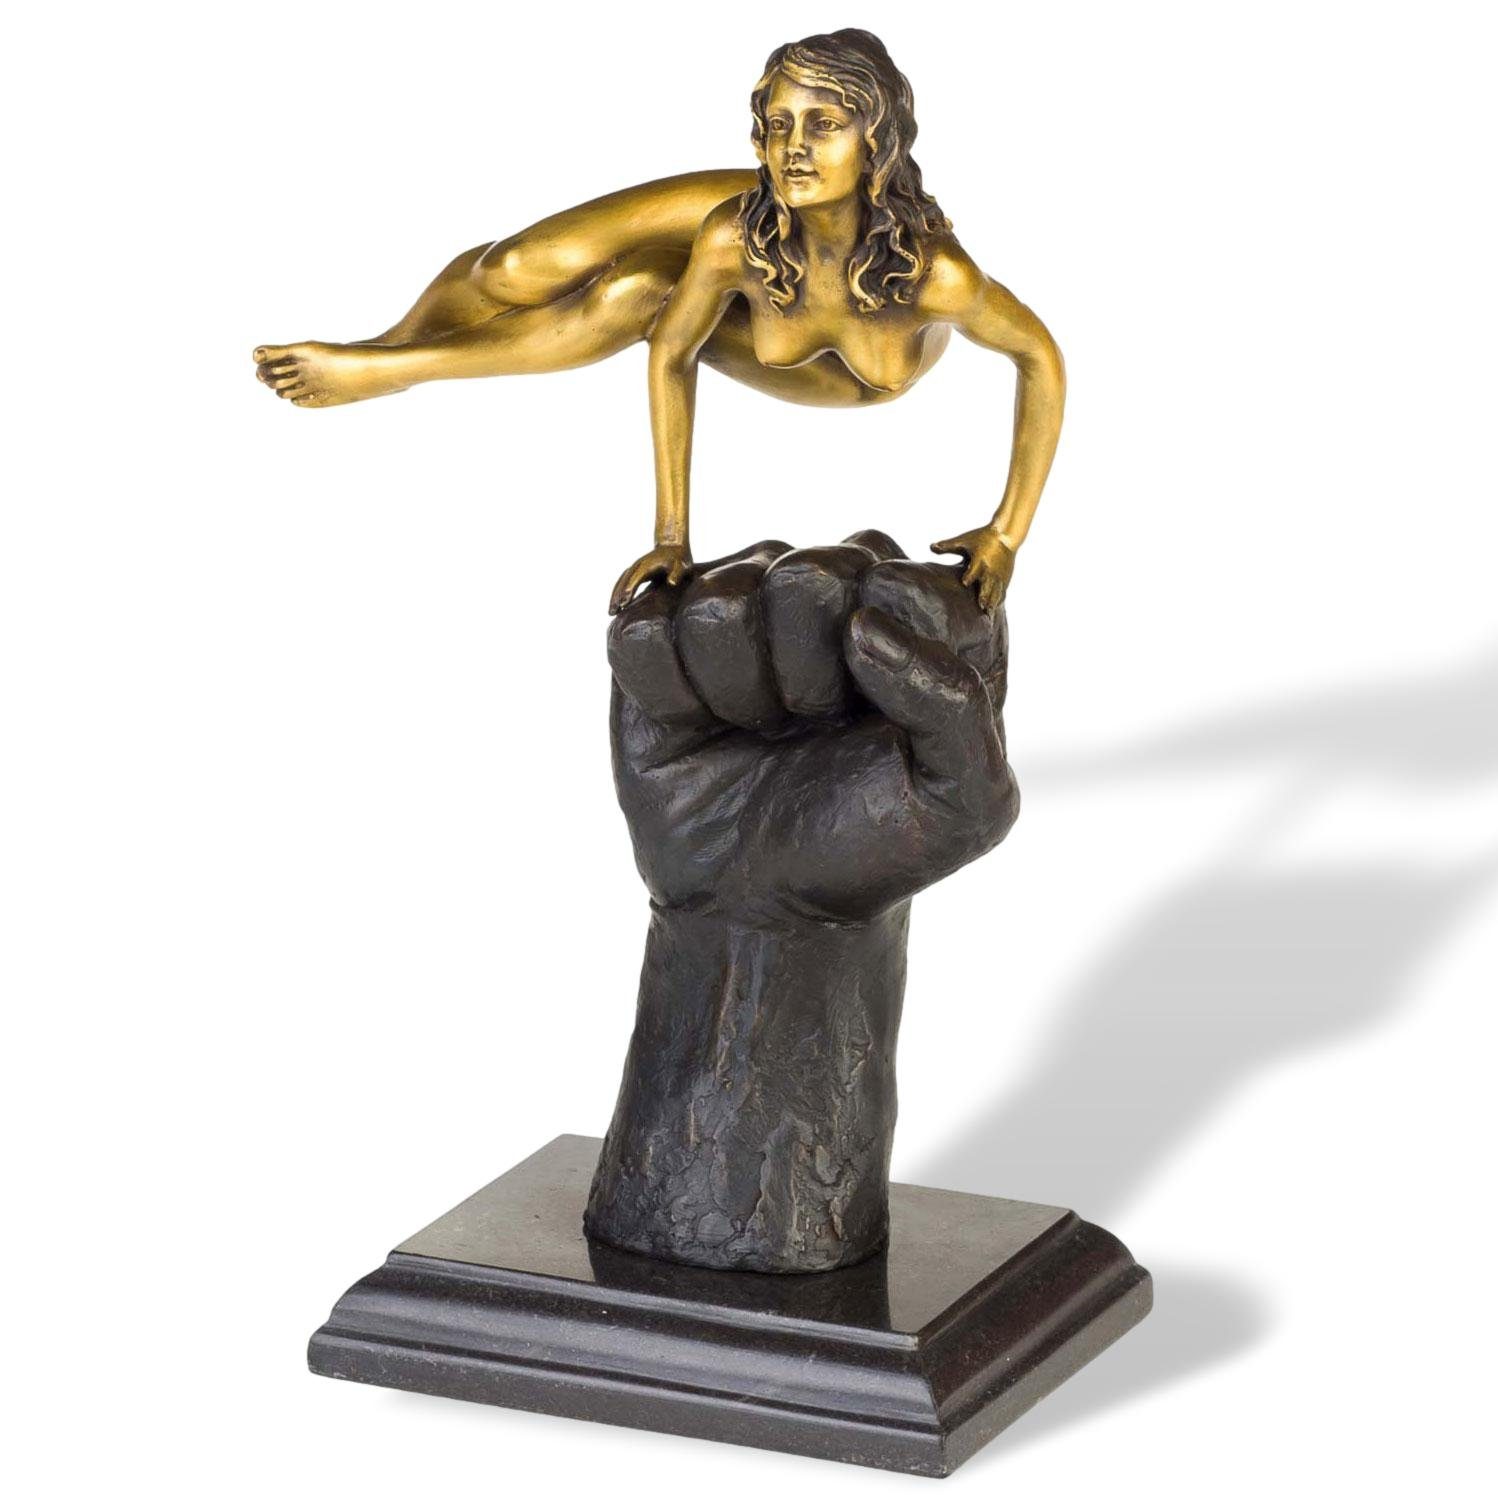 Aubaho Skulptur Bronzeskulptur Frau King Kong Hand Erotik Kunst im Antik-Stil Bronze F